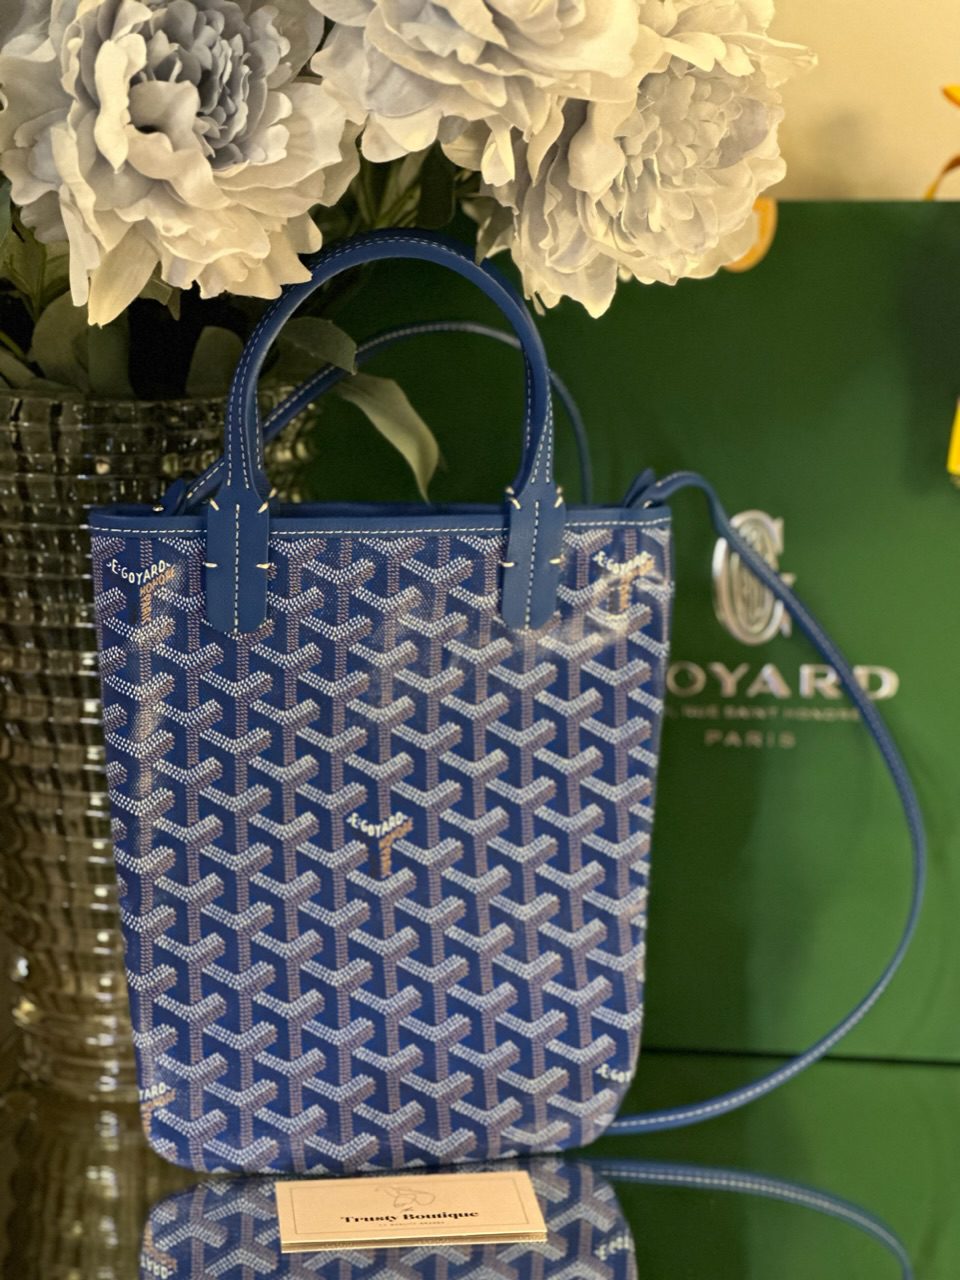 Goyard Poitiers Claire-Voie Bag turquoise blue ⭕️ One available